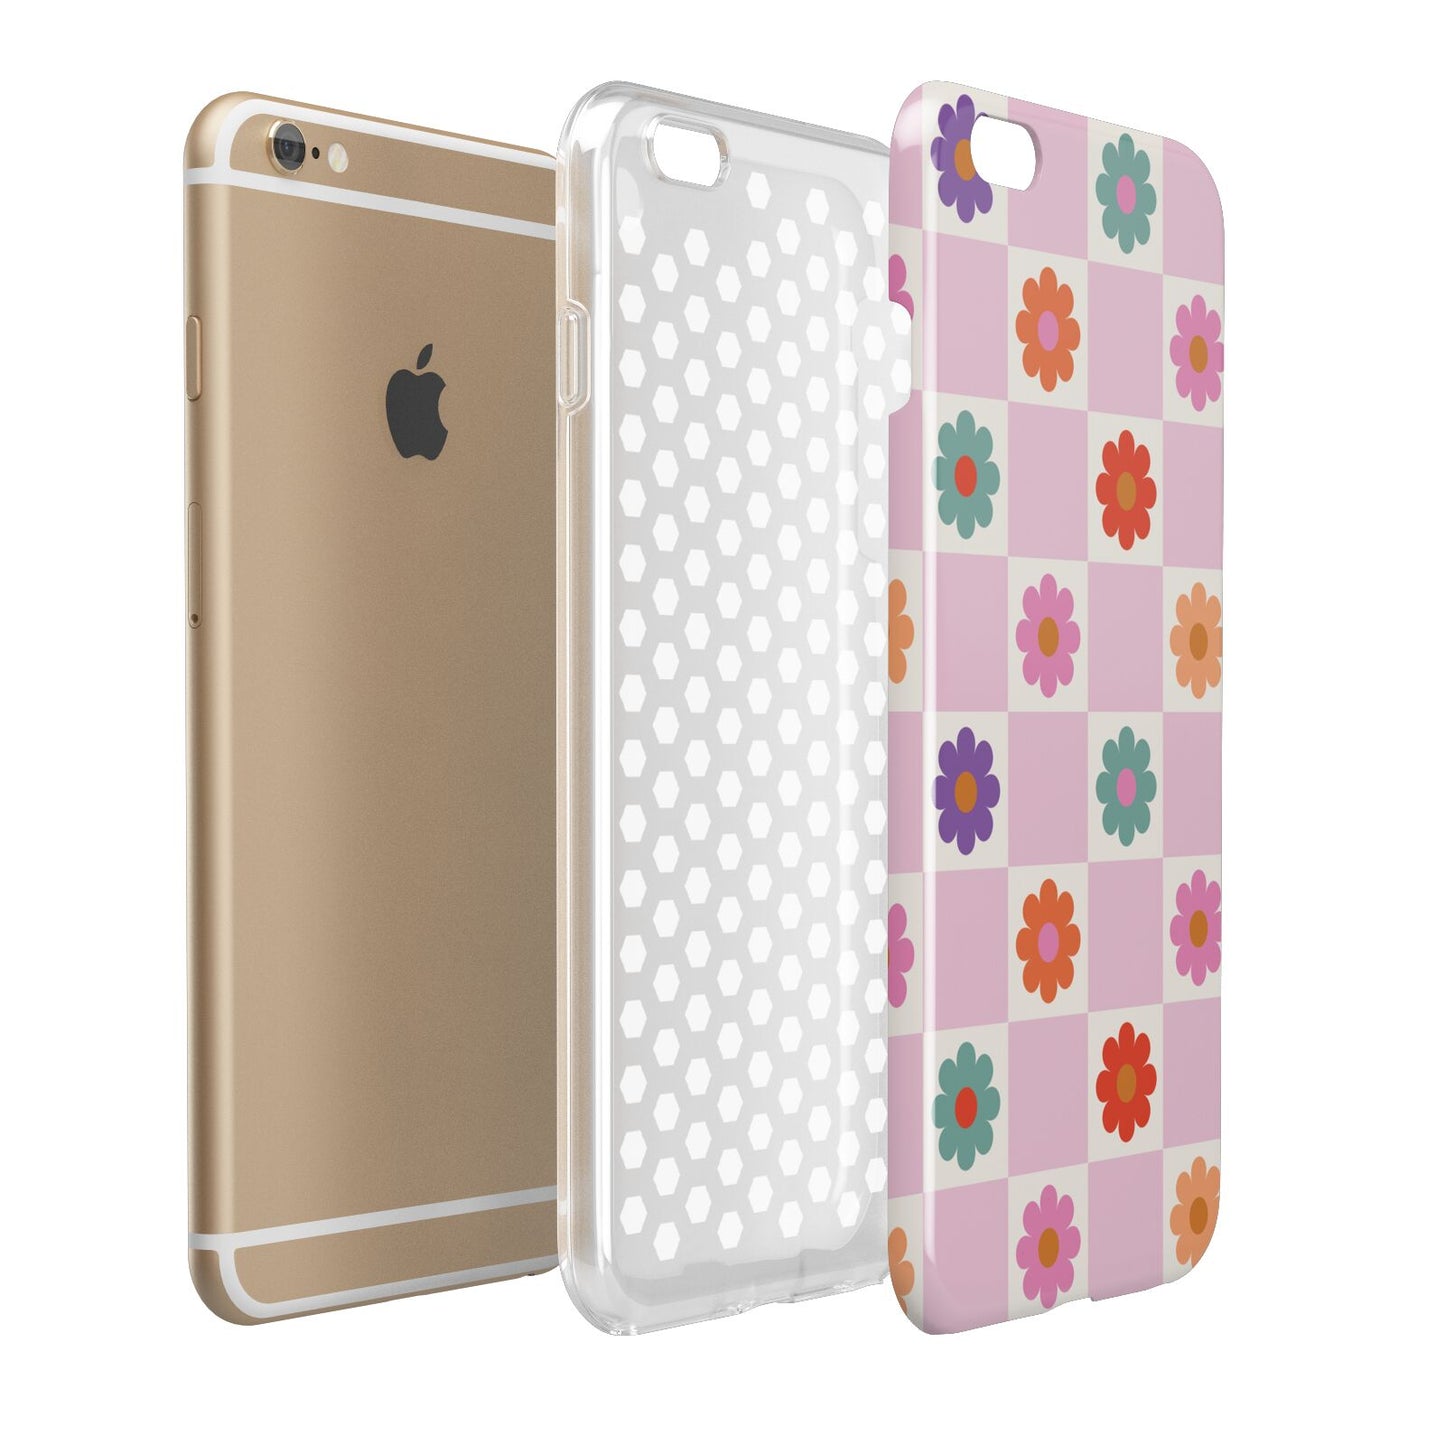 Checked flowers Apple iPhone 6 Plus 3D Tough Case Expand Detail Image